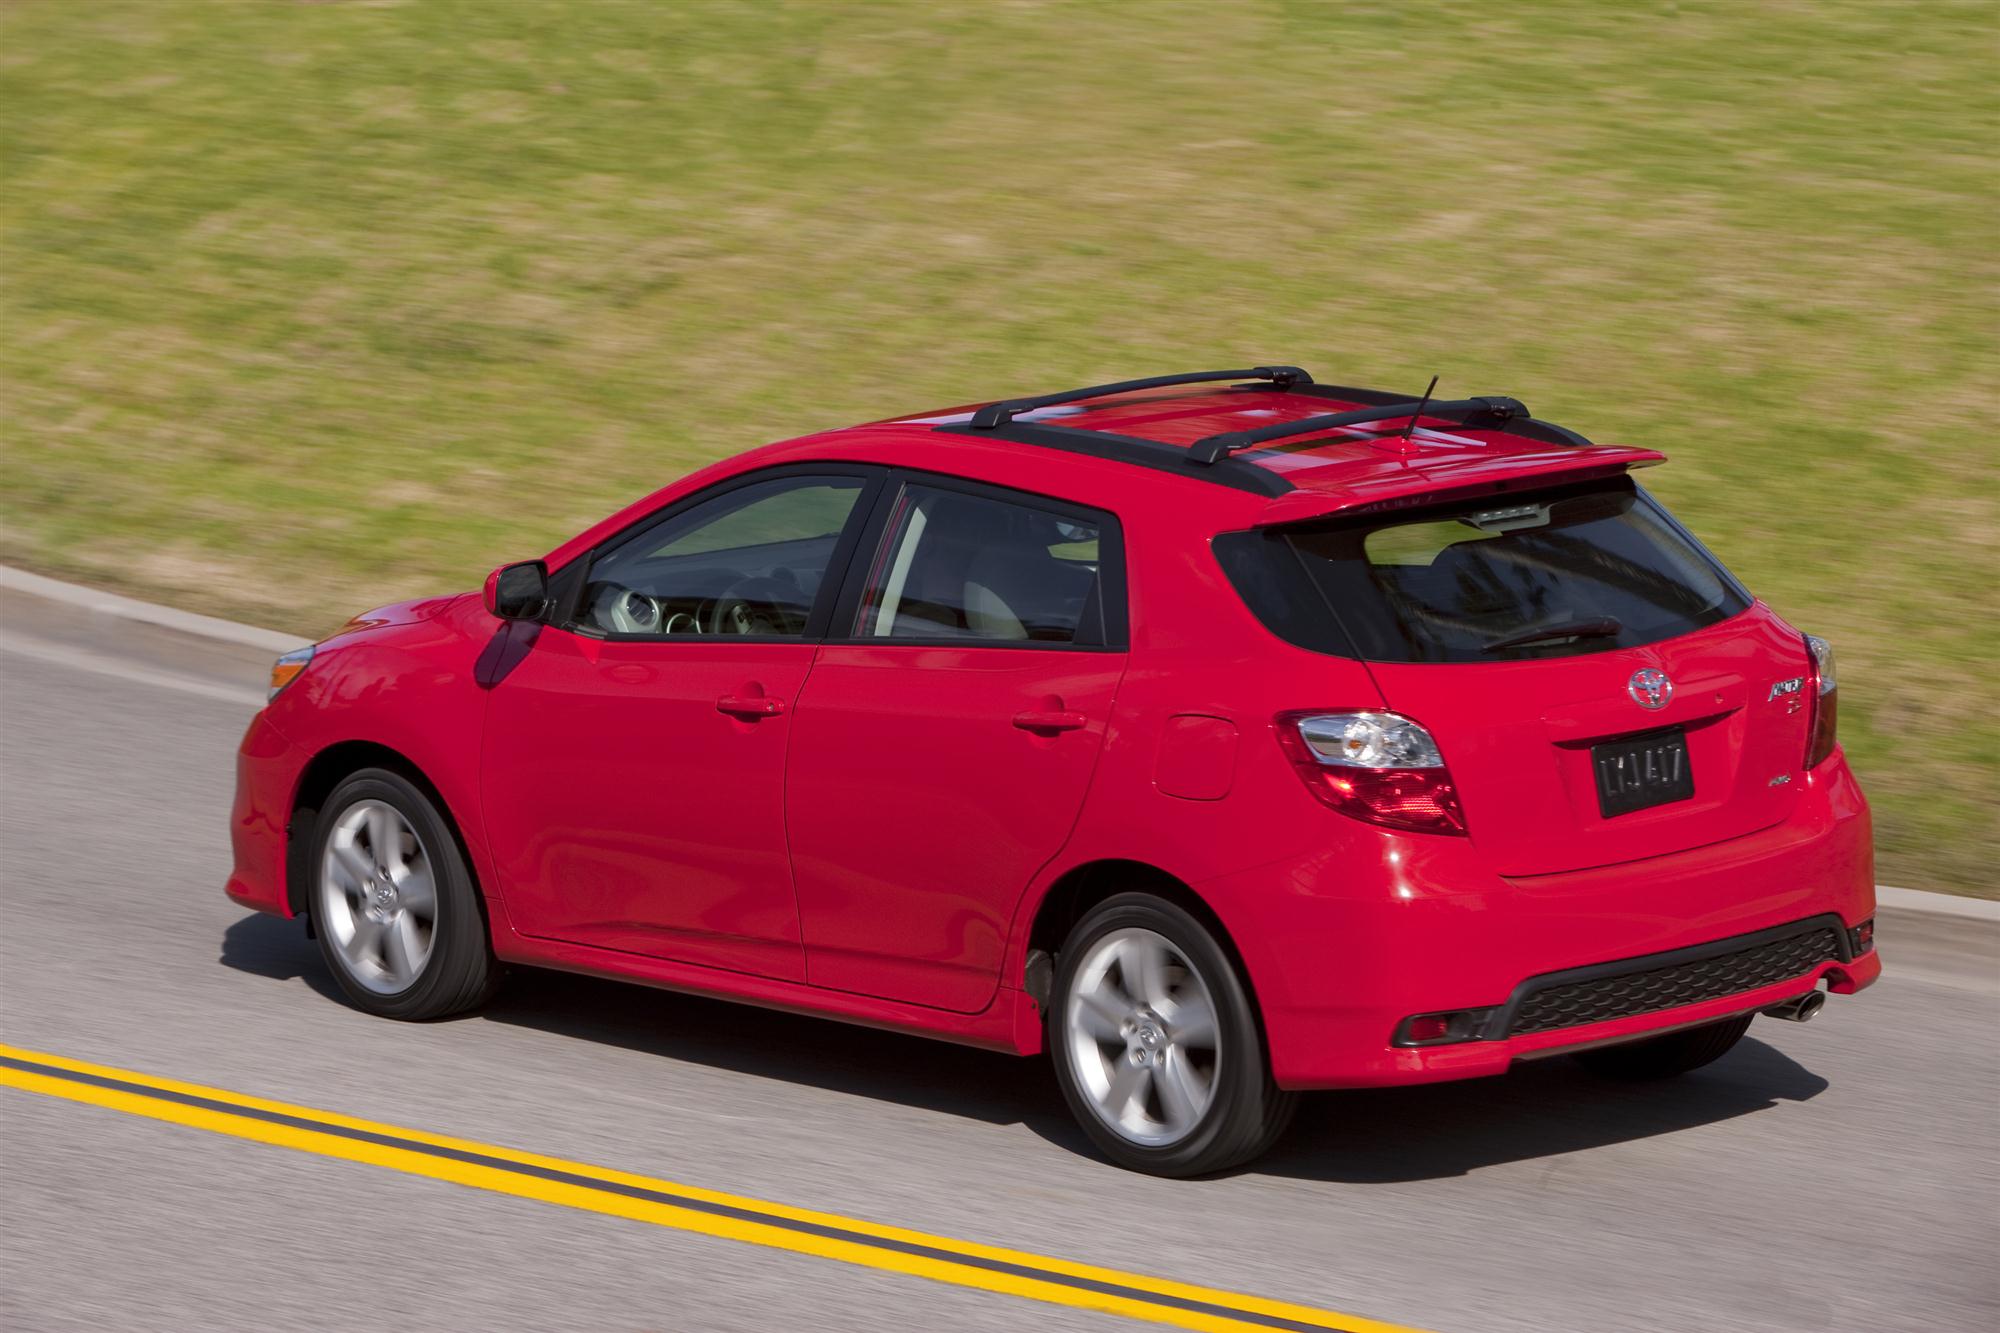 2012 Toyota Matrix: Small Car, Low Gas Mileage Too?